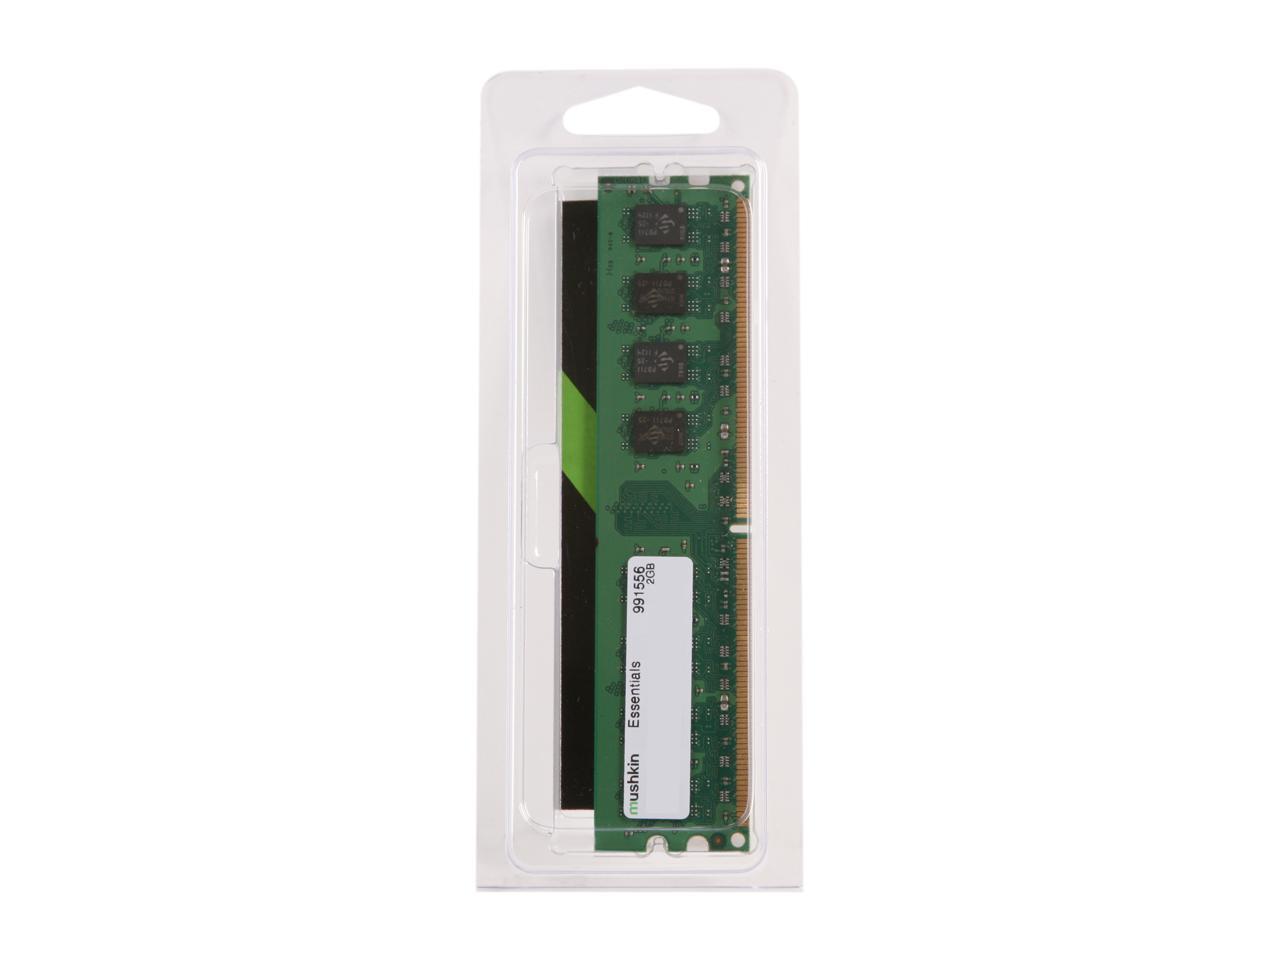 Mushkin Enhanced 2GB DDR2 667 (PC2 5300) Desktop Memory Model 991556